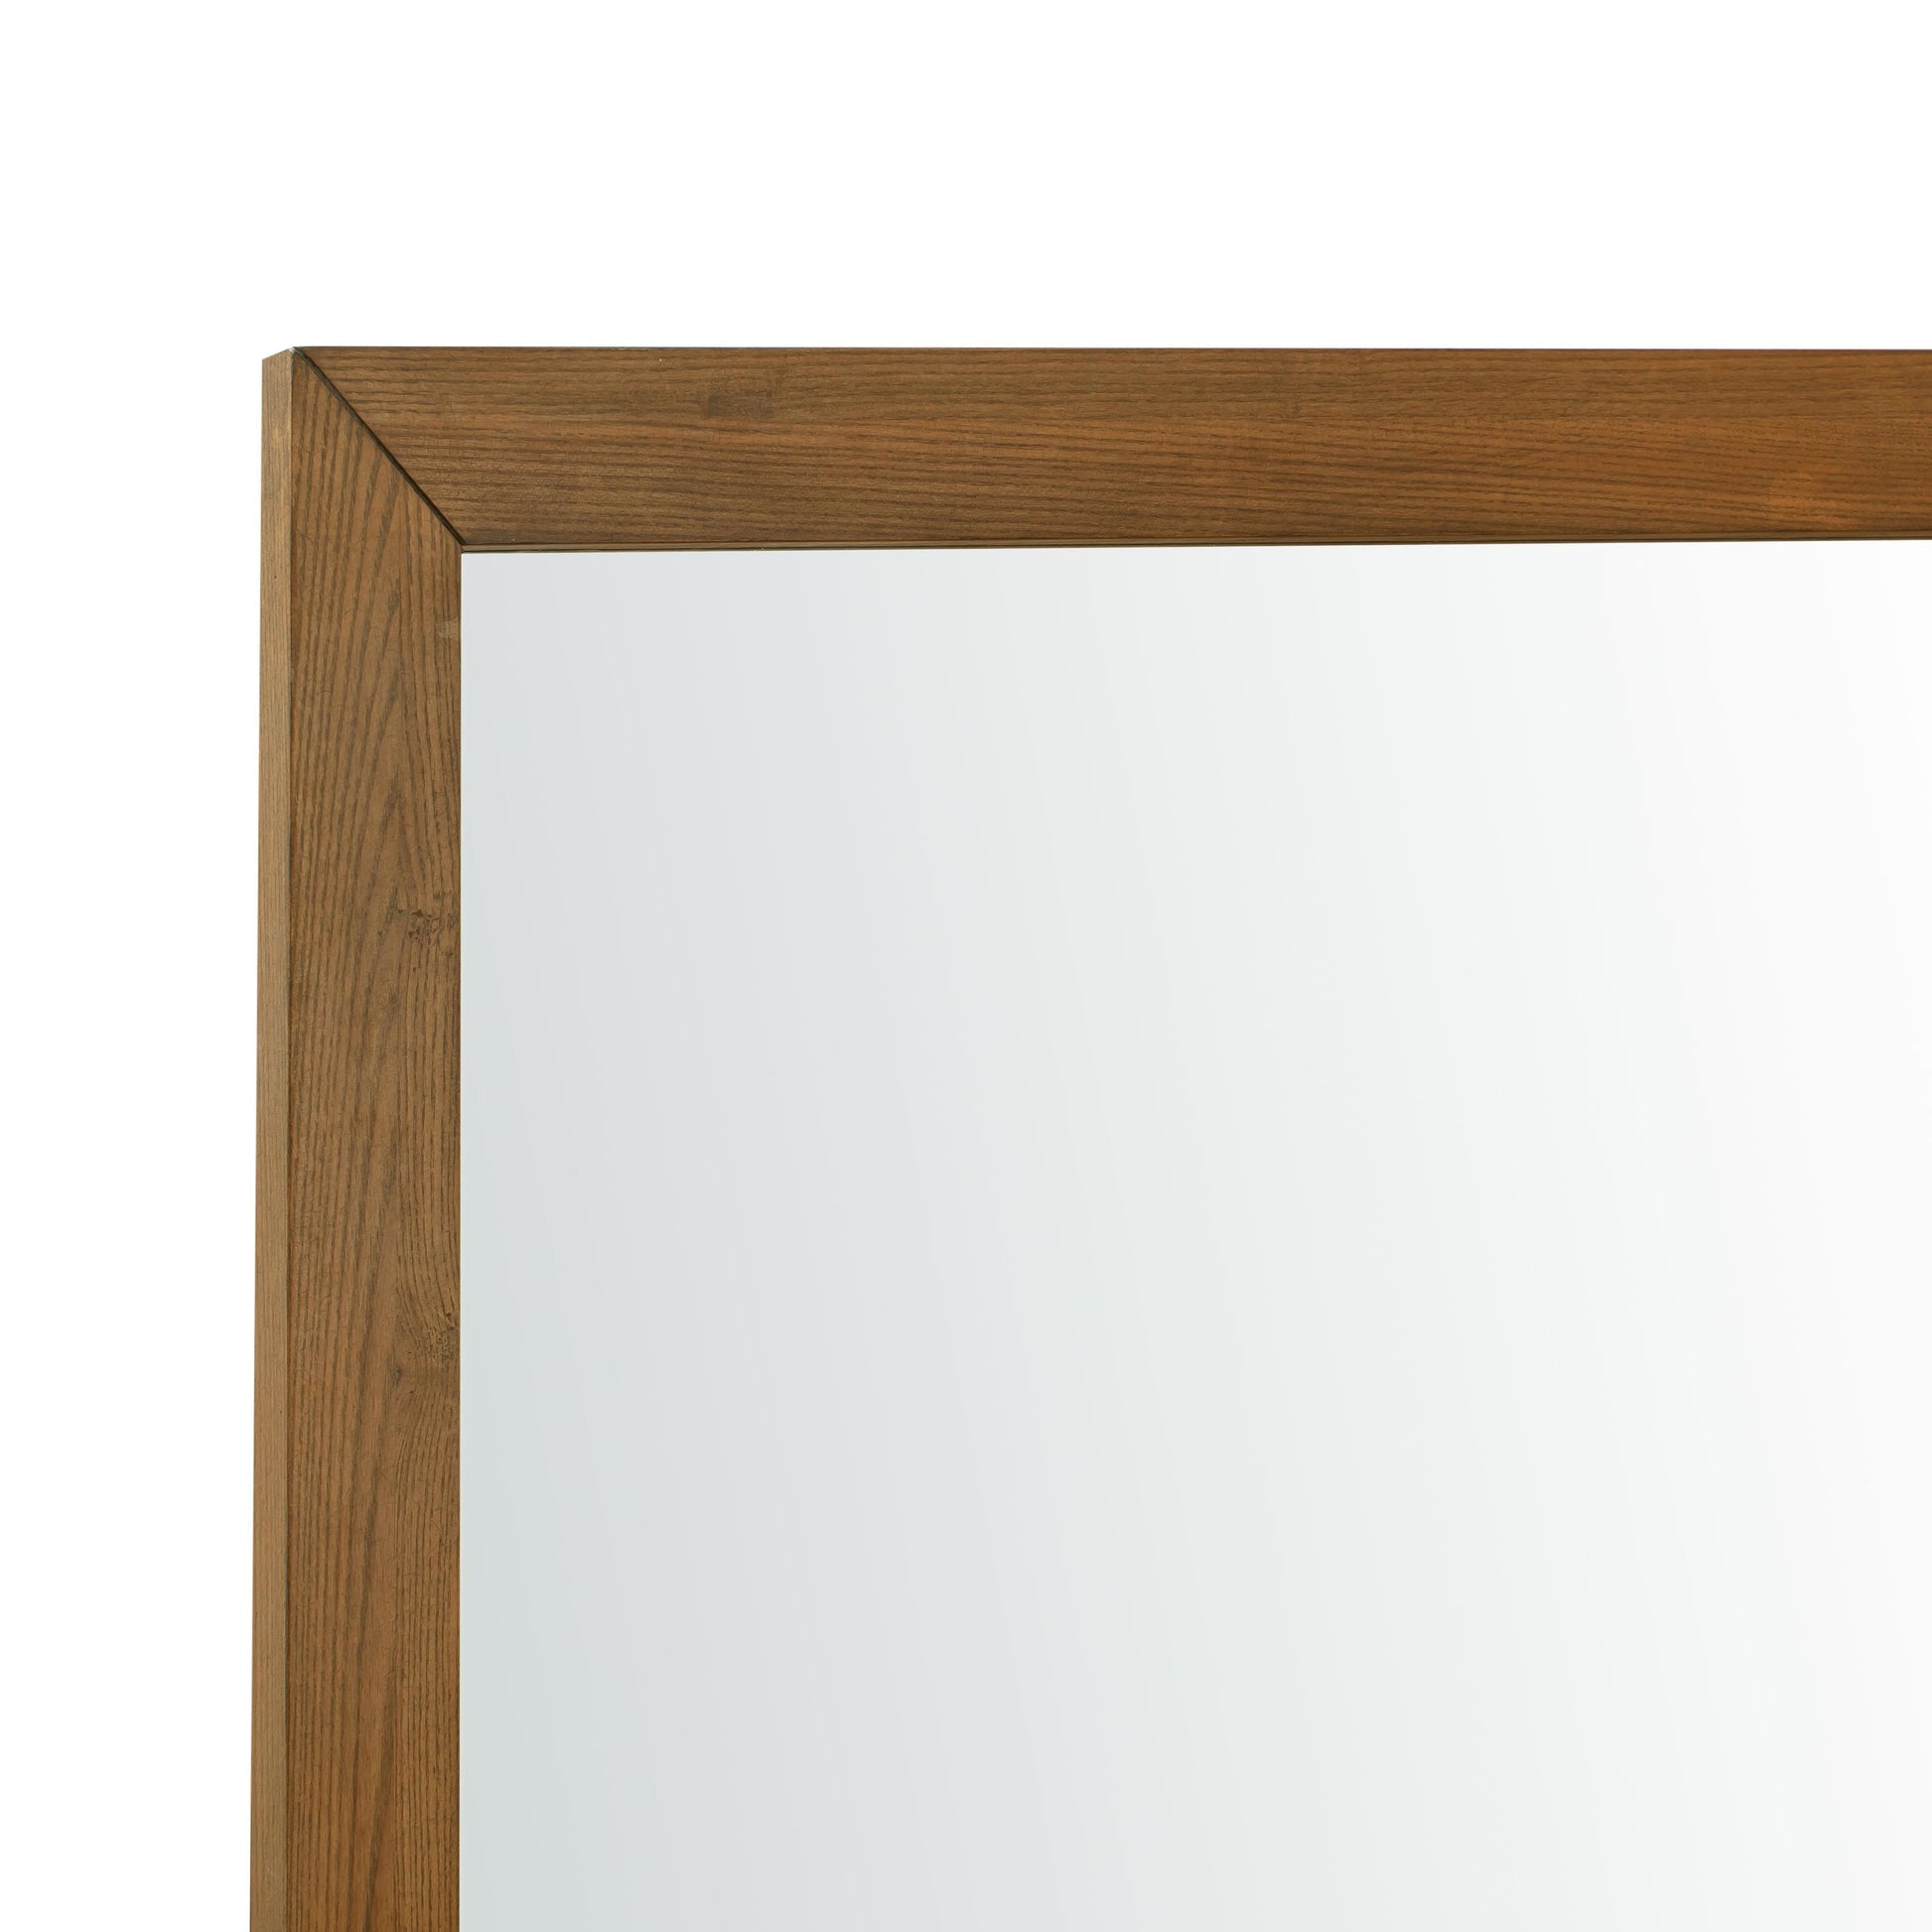 Emery Pecan Mirror by TOV